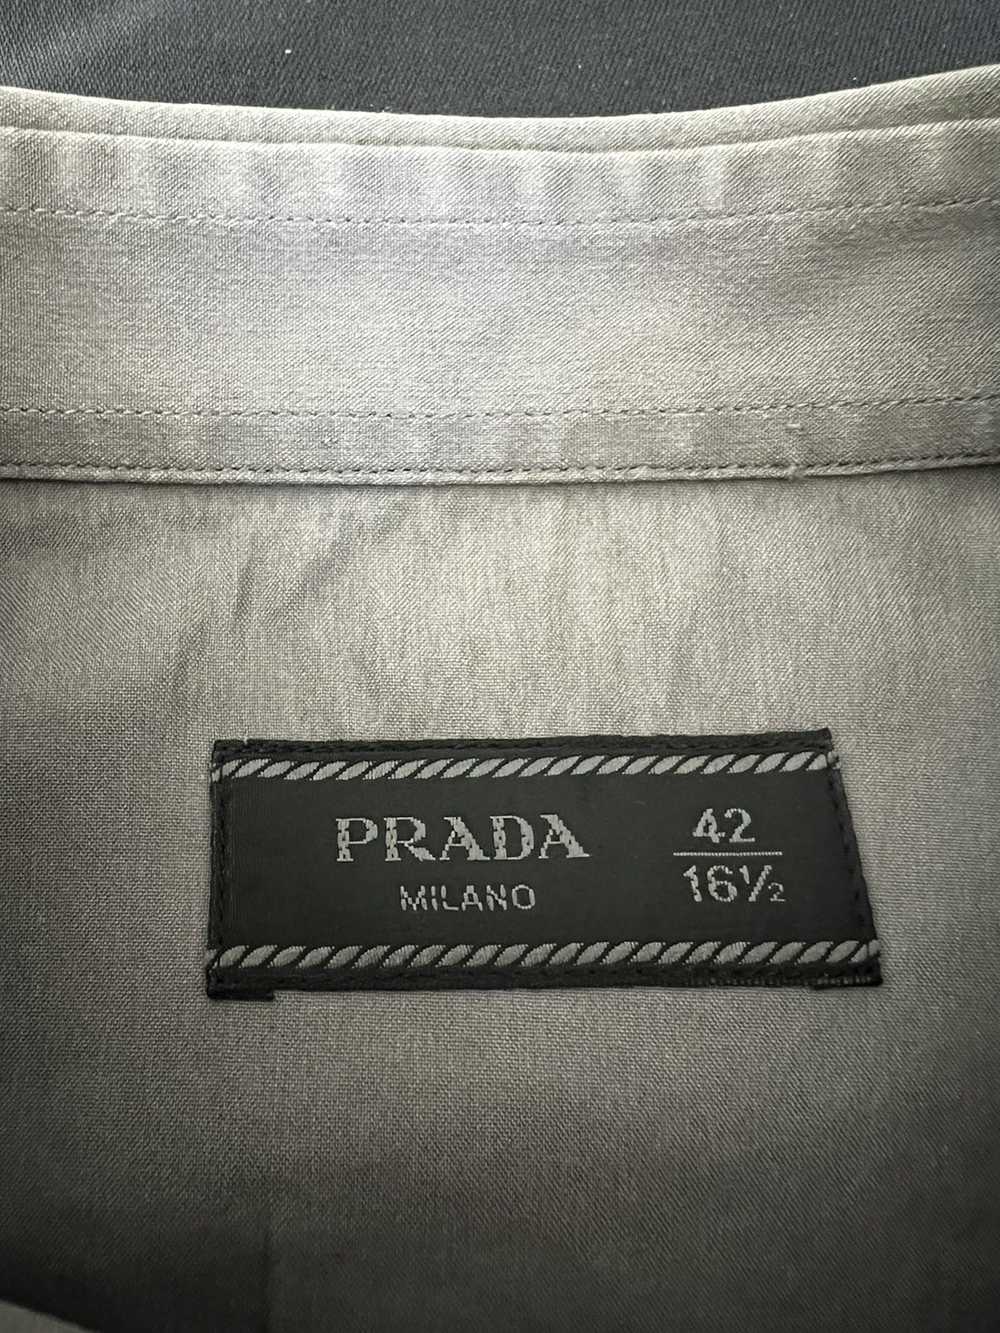 Prada Prada Grey Button Up Shirt - image 5